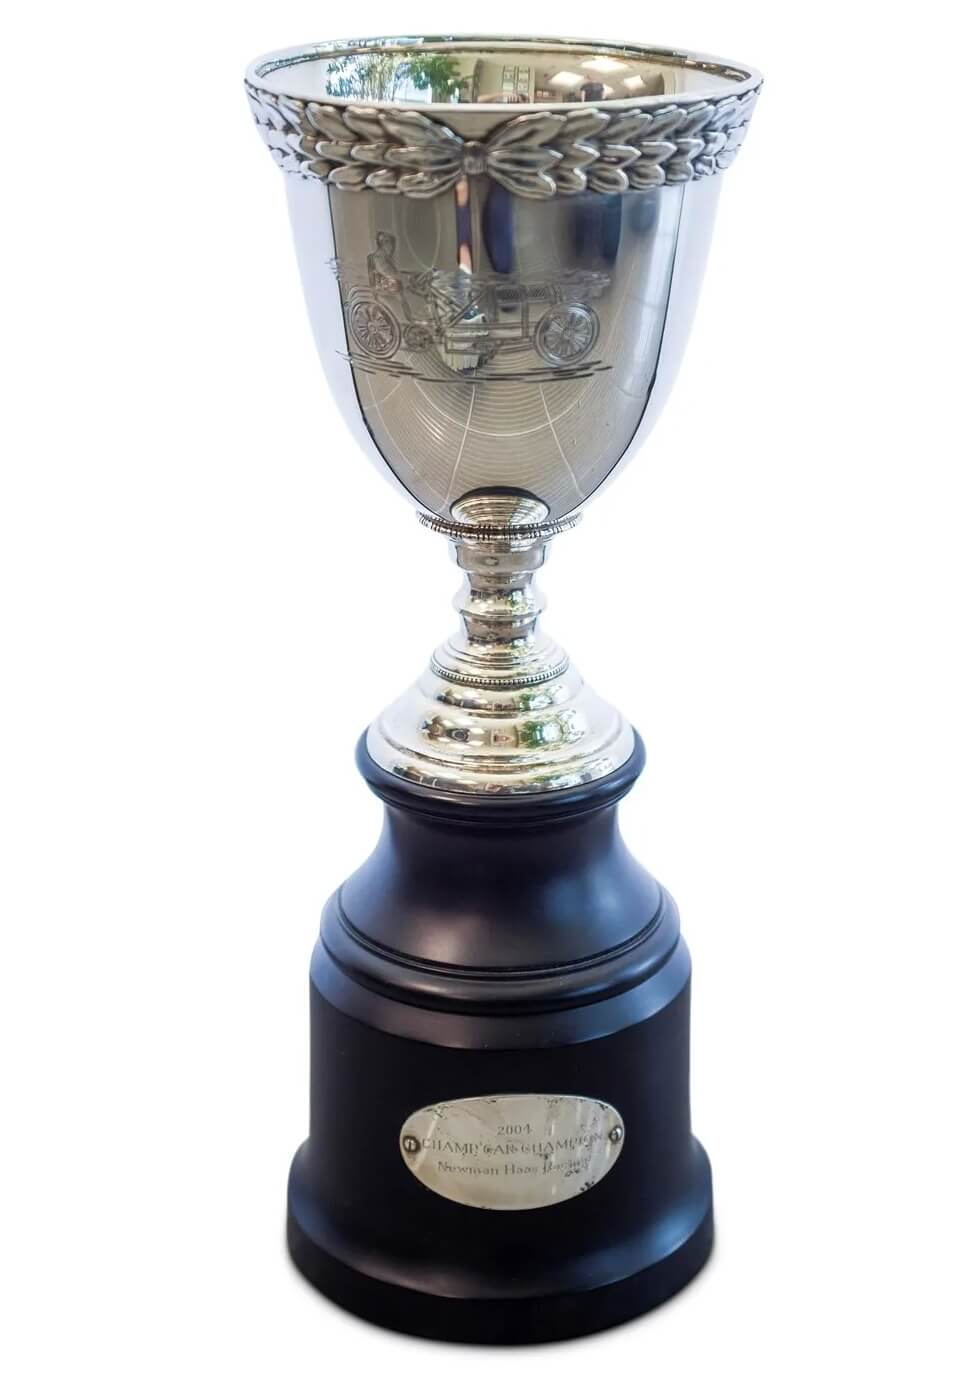 CART Trophy 2004 Championship